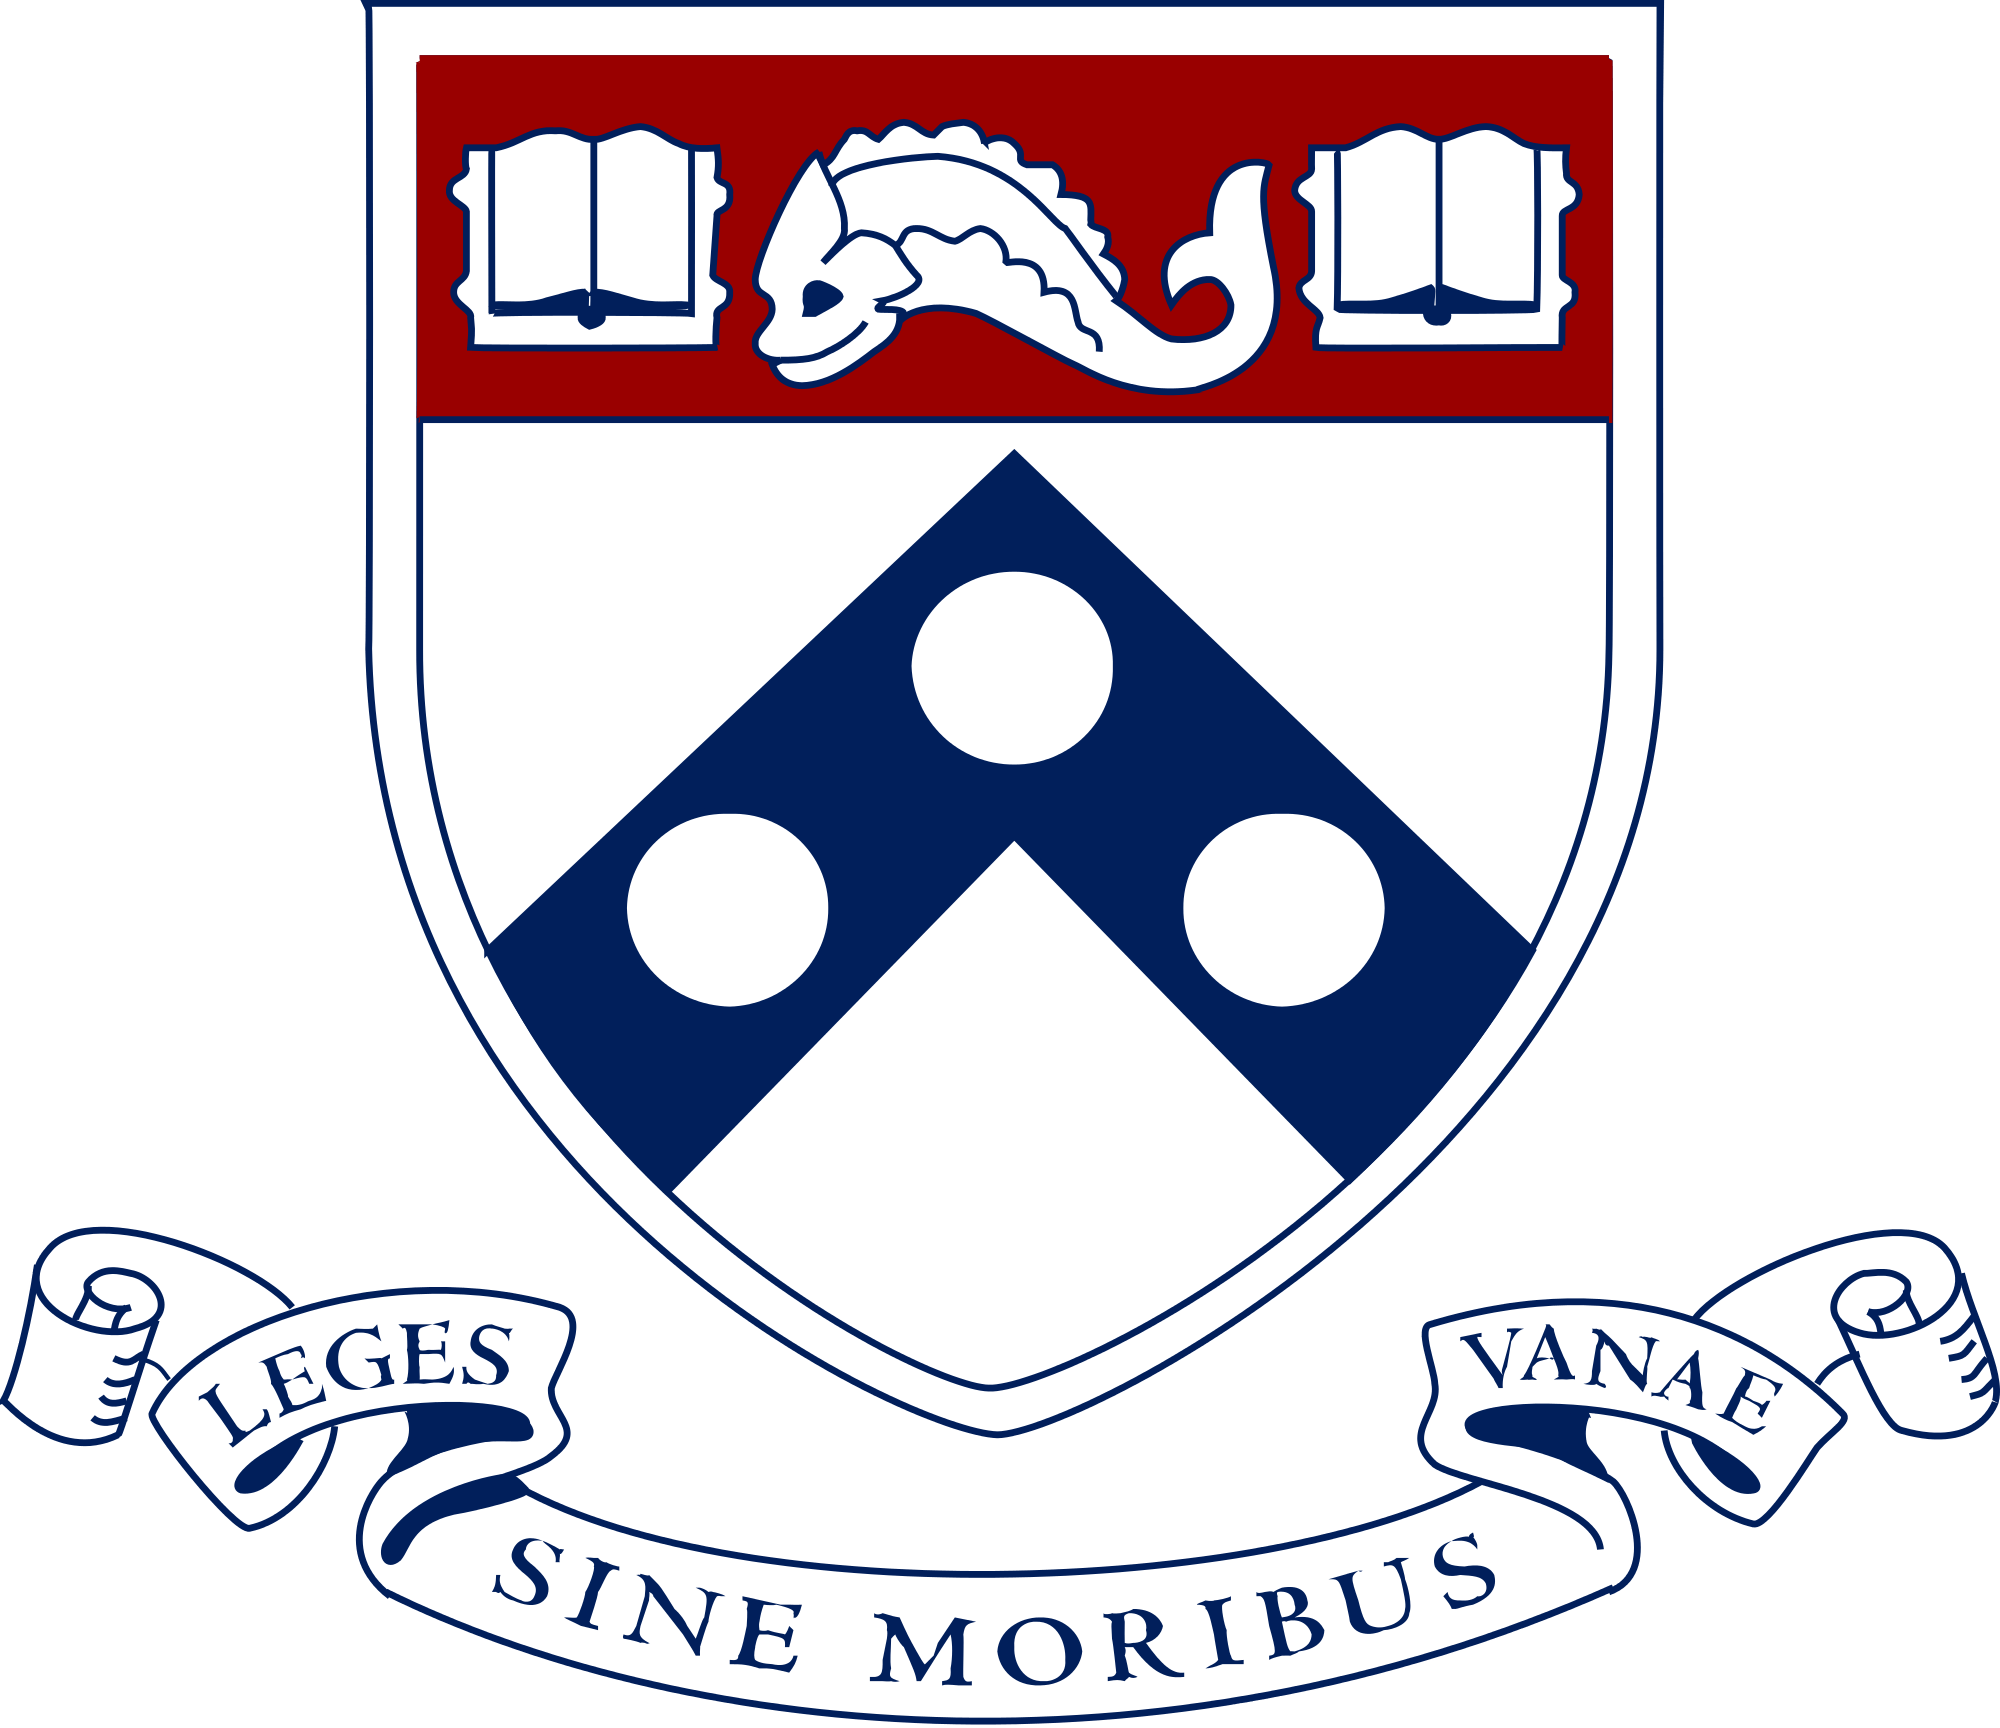 The Pennsylvania Logo - University of Pennsylvania